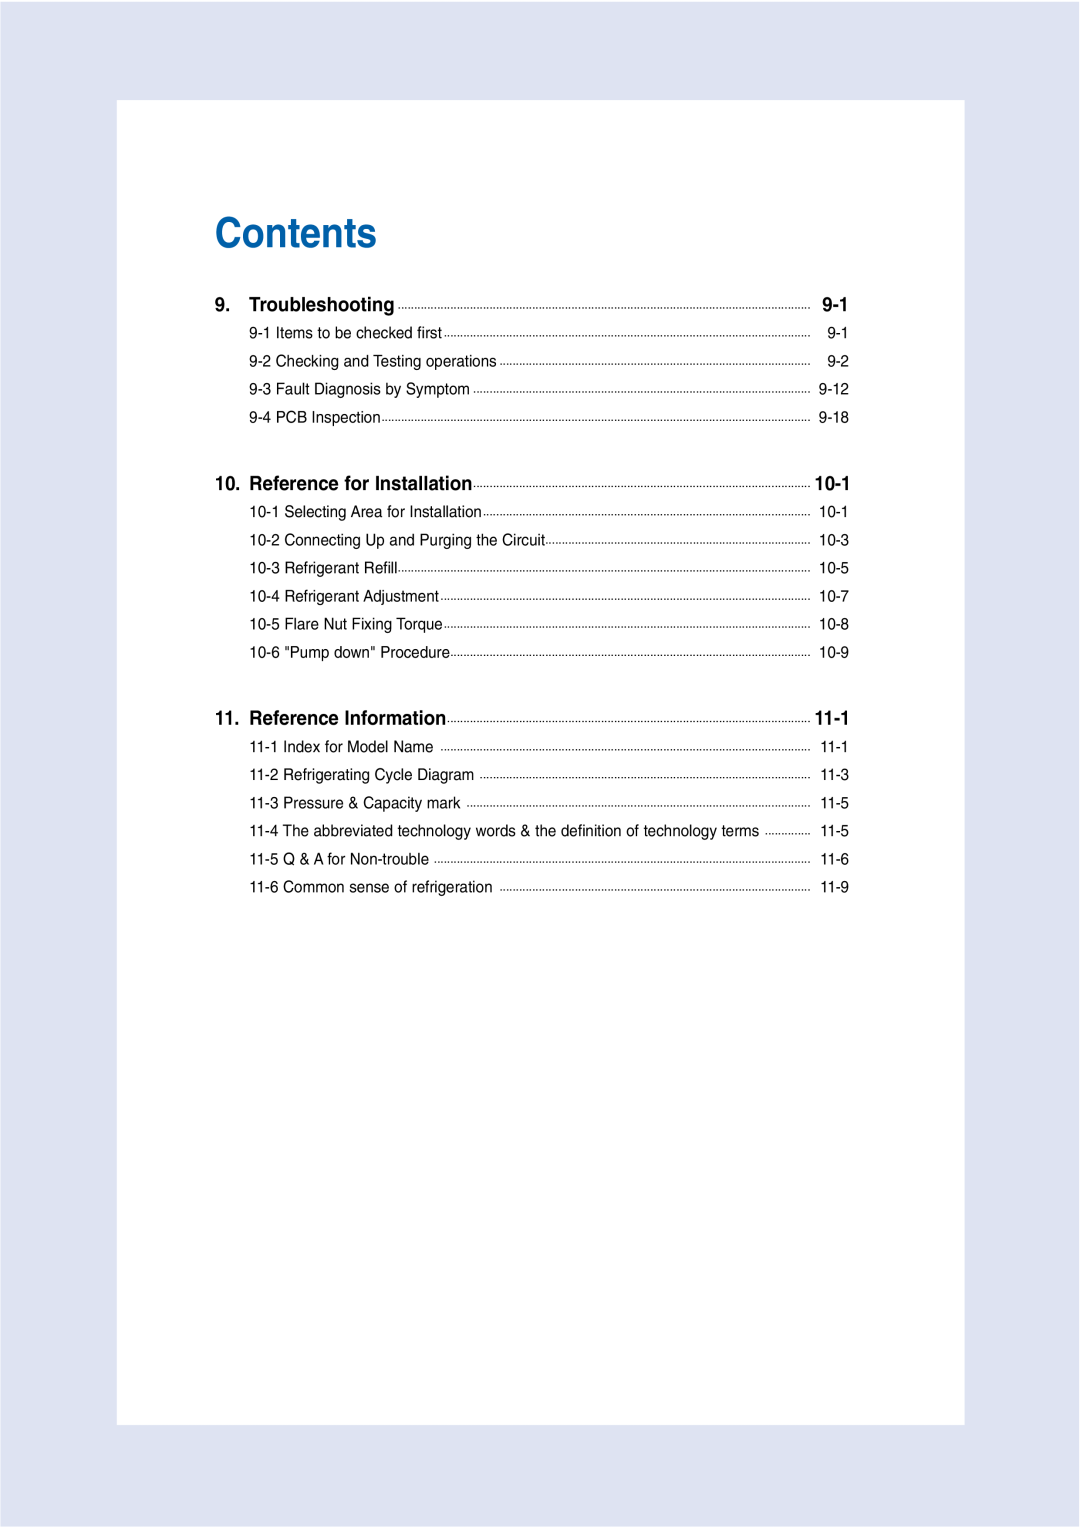 Samsung MH026FNCA service manual 10-1, 11-1, Contents, 9-12 